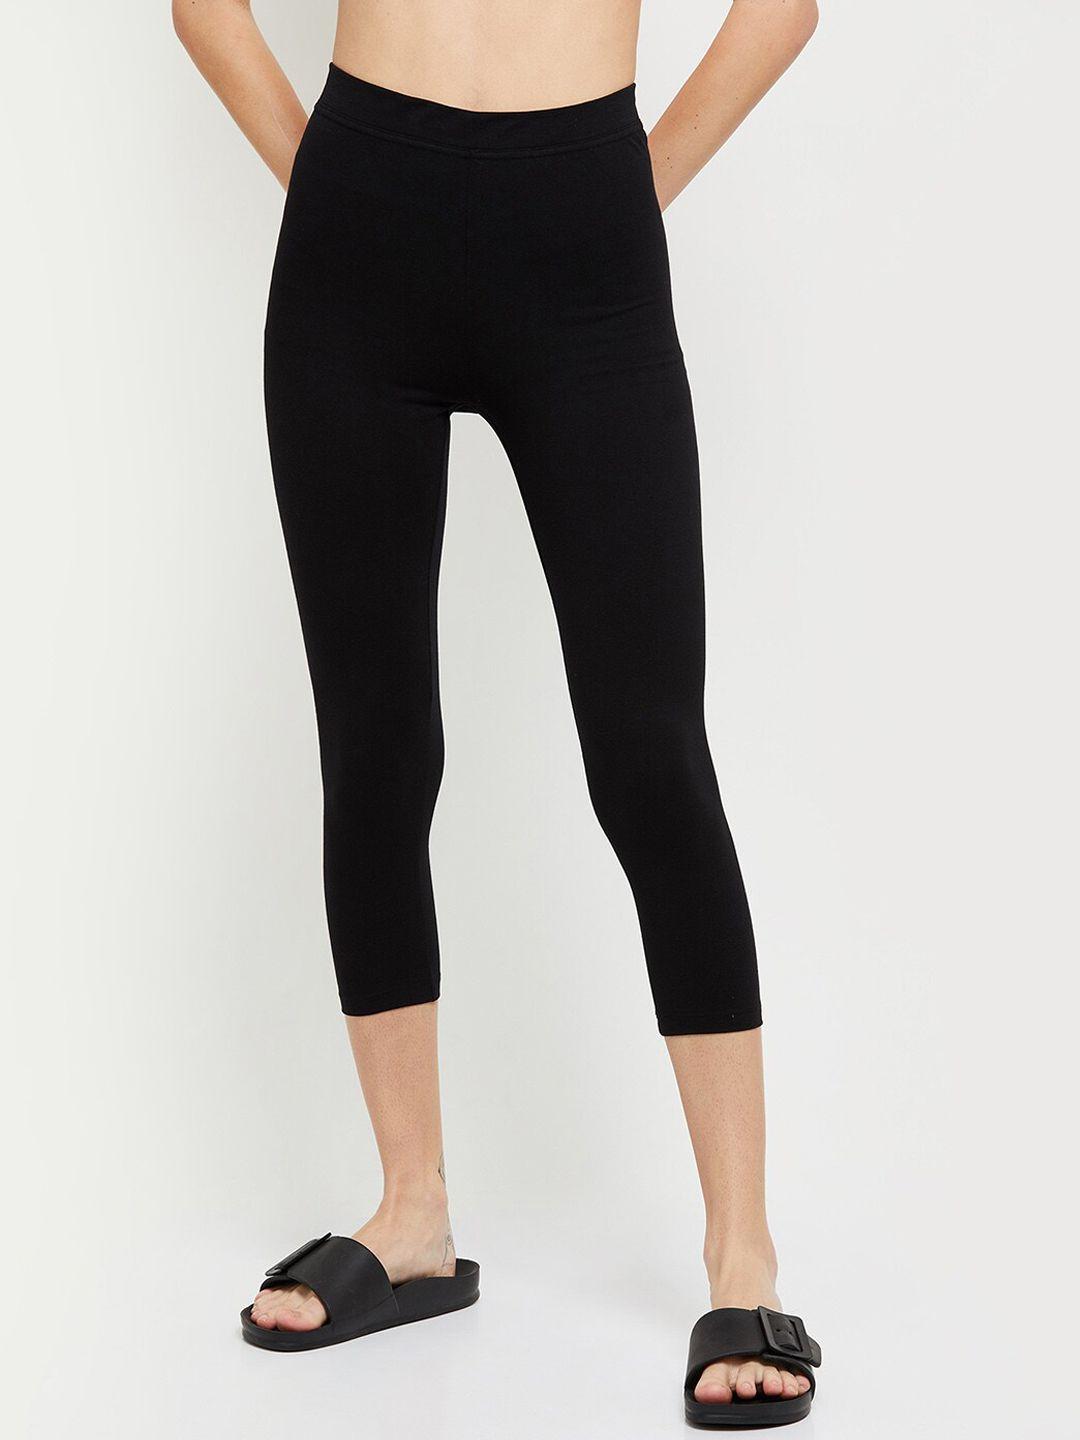 max women black solid three-fourth length leggings